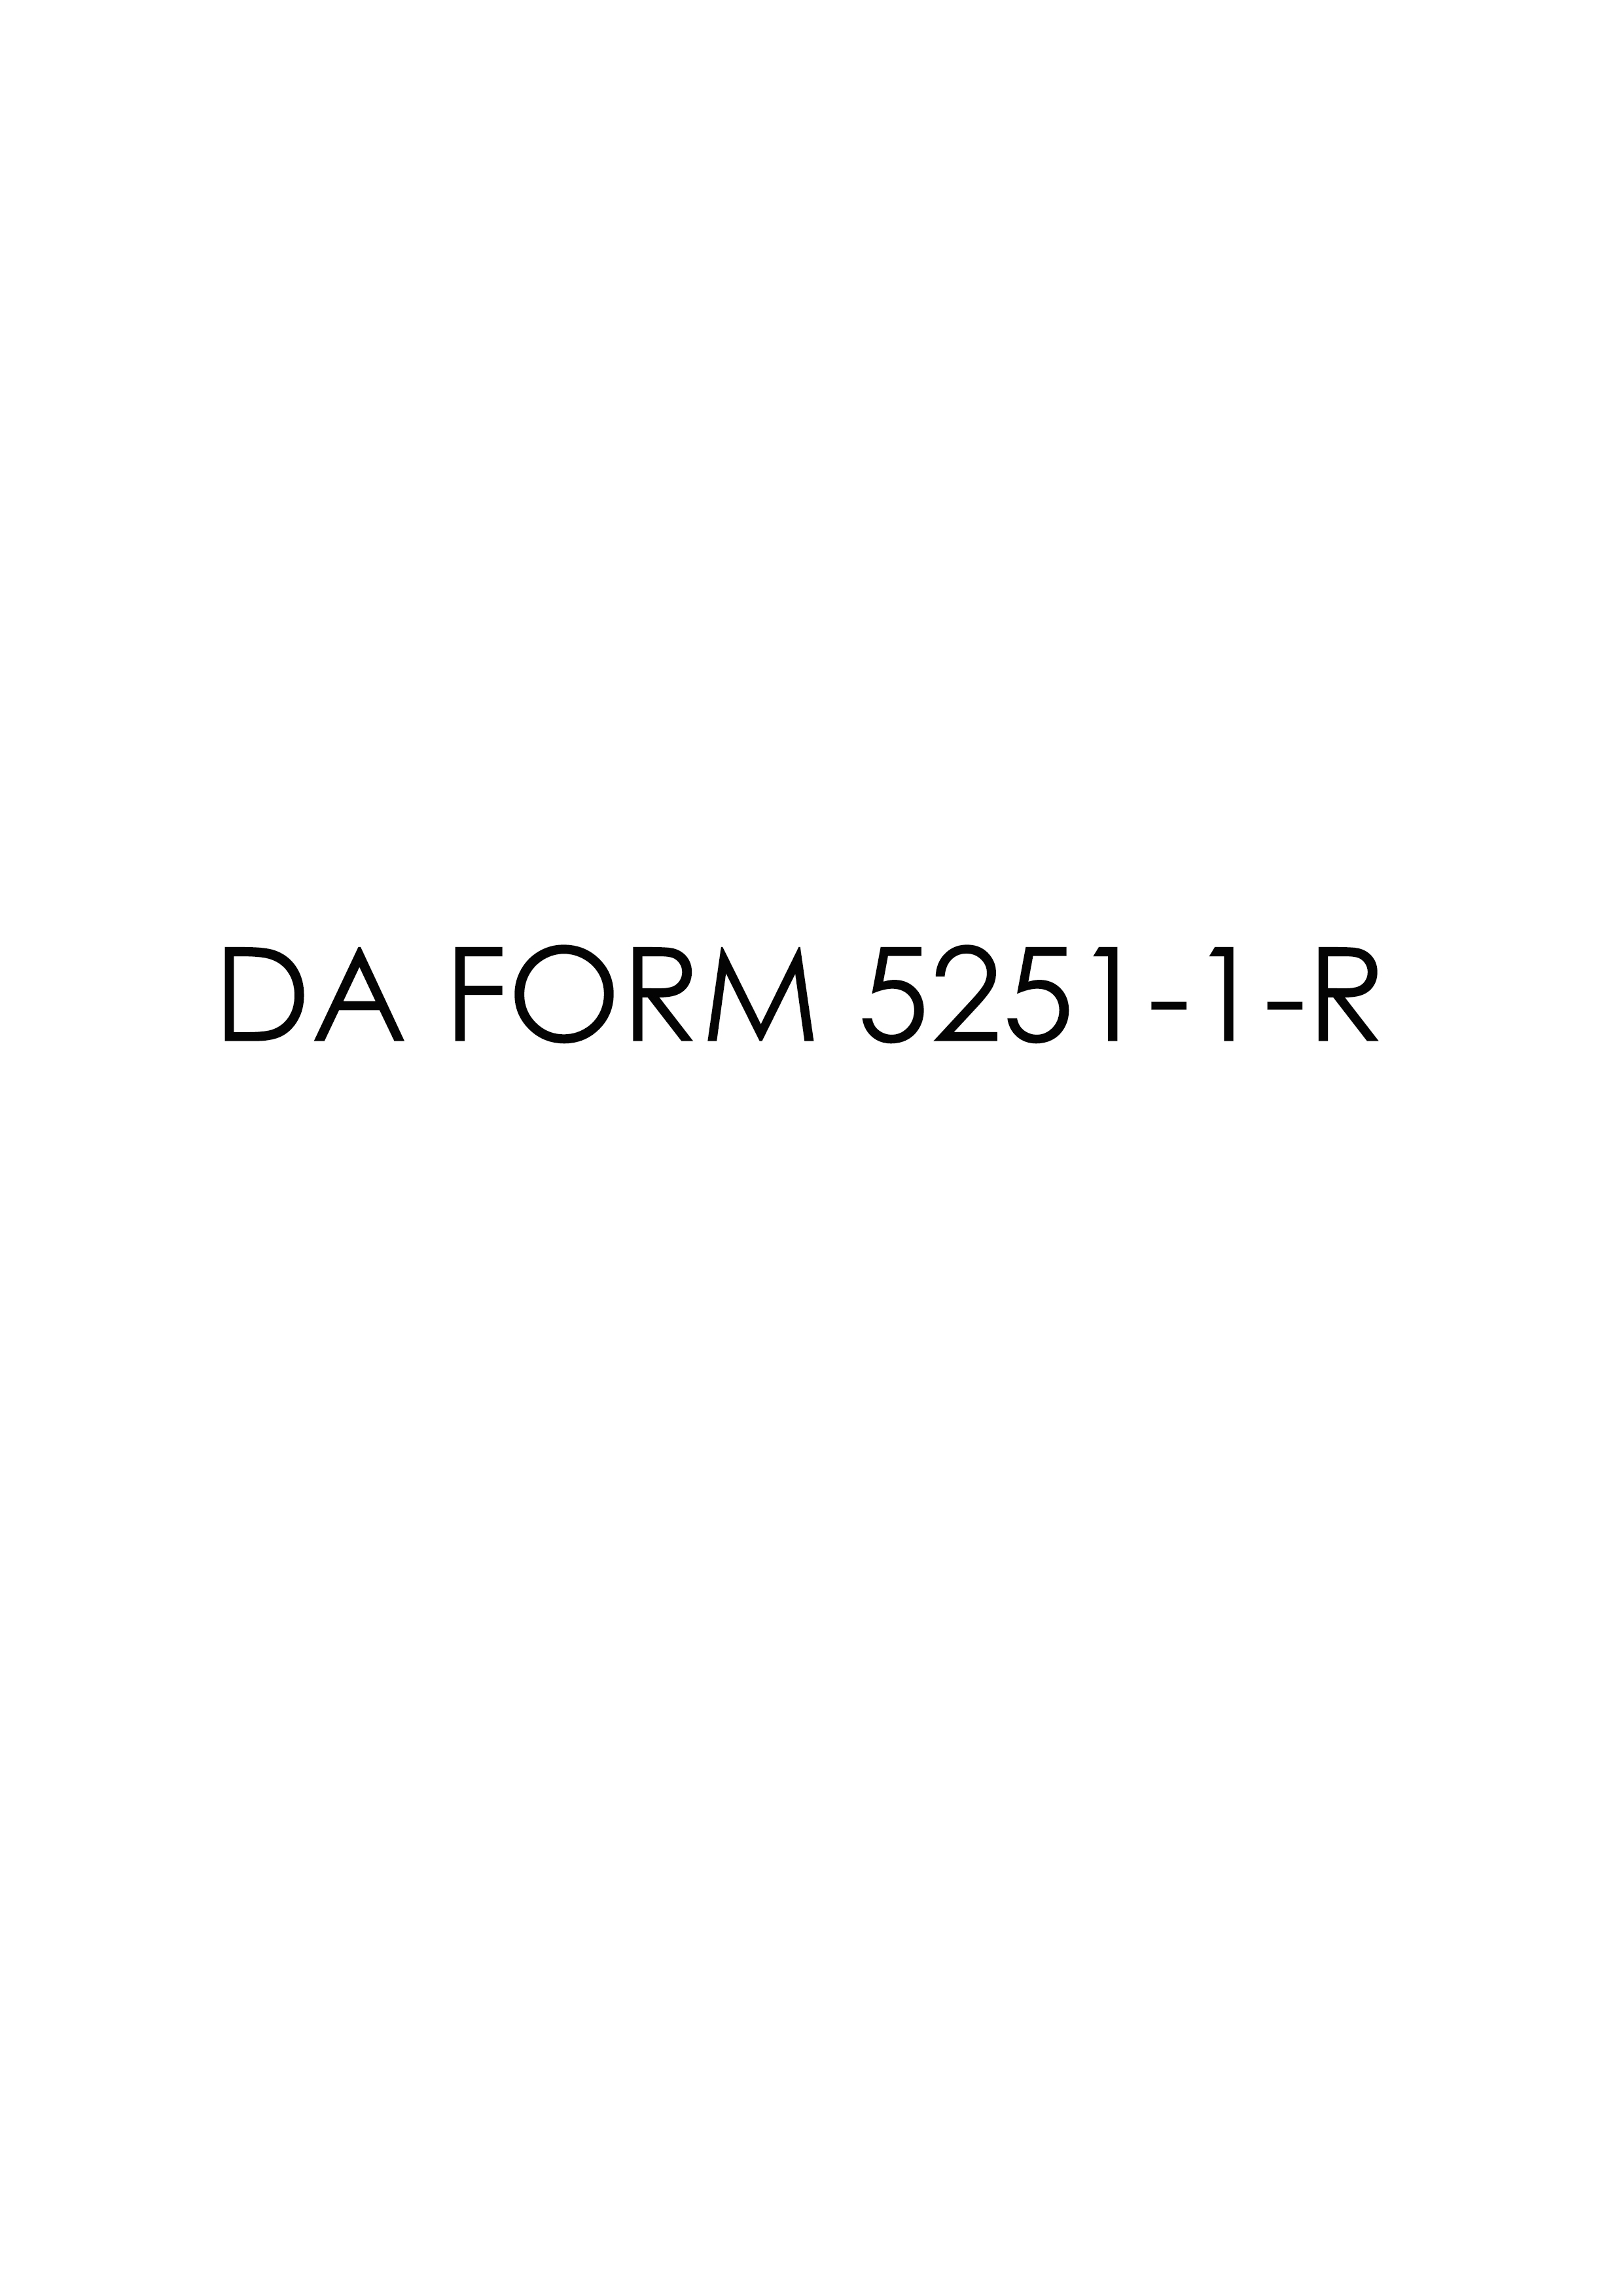 da Form 5251-1-R fillable